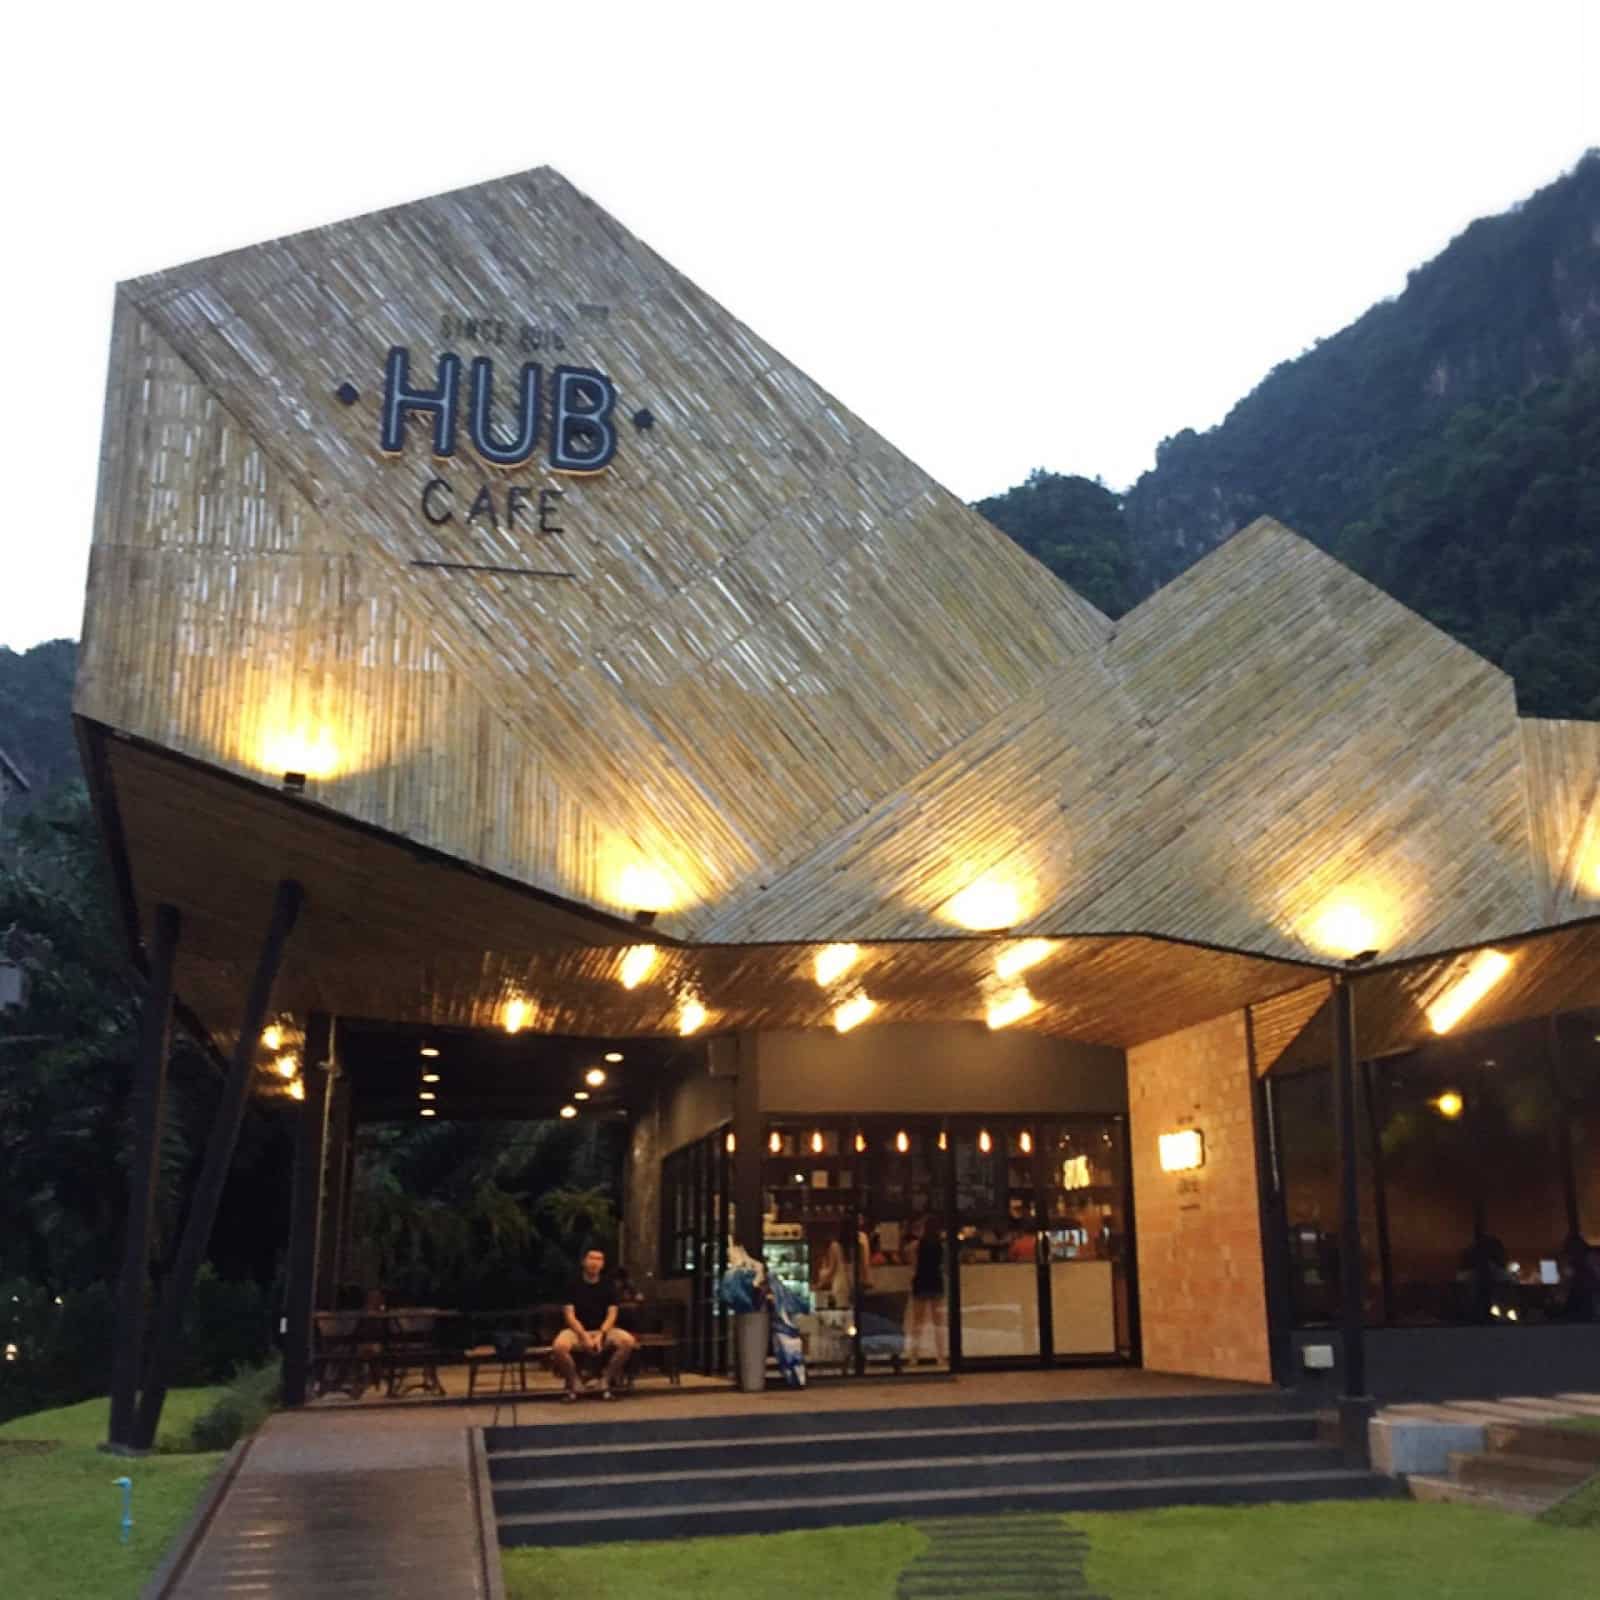 The entrance of Hub Cafe, Krabi